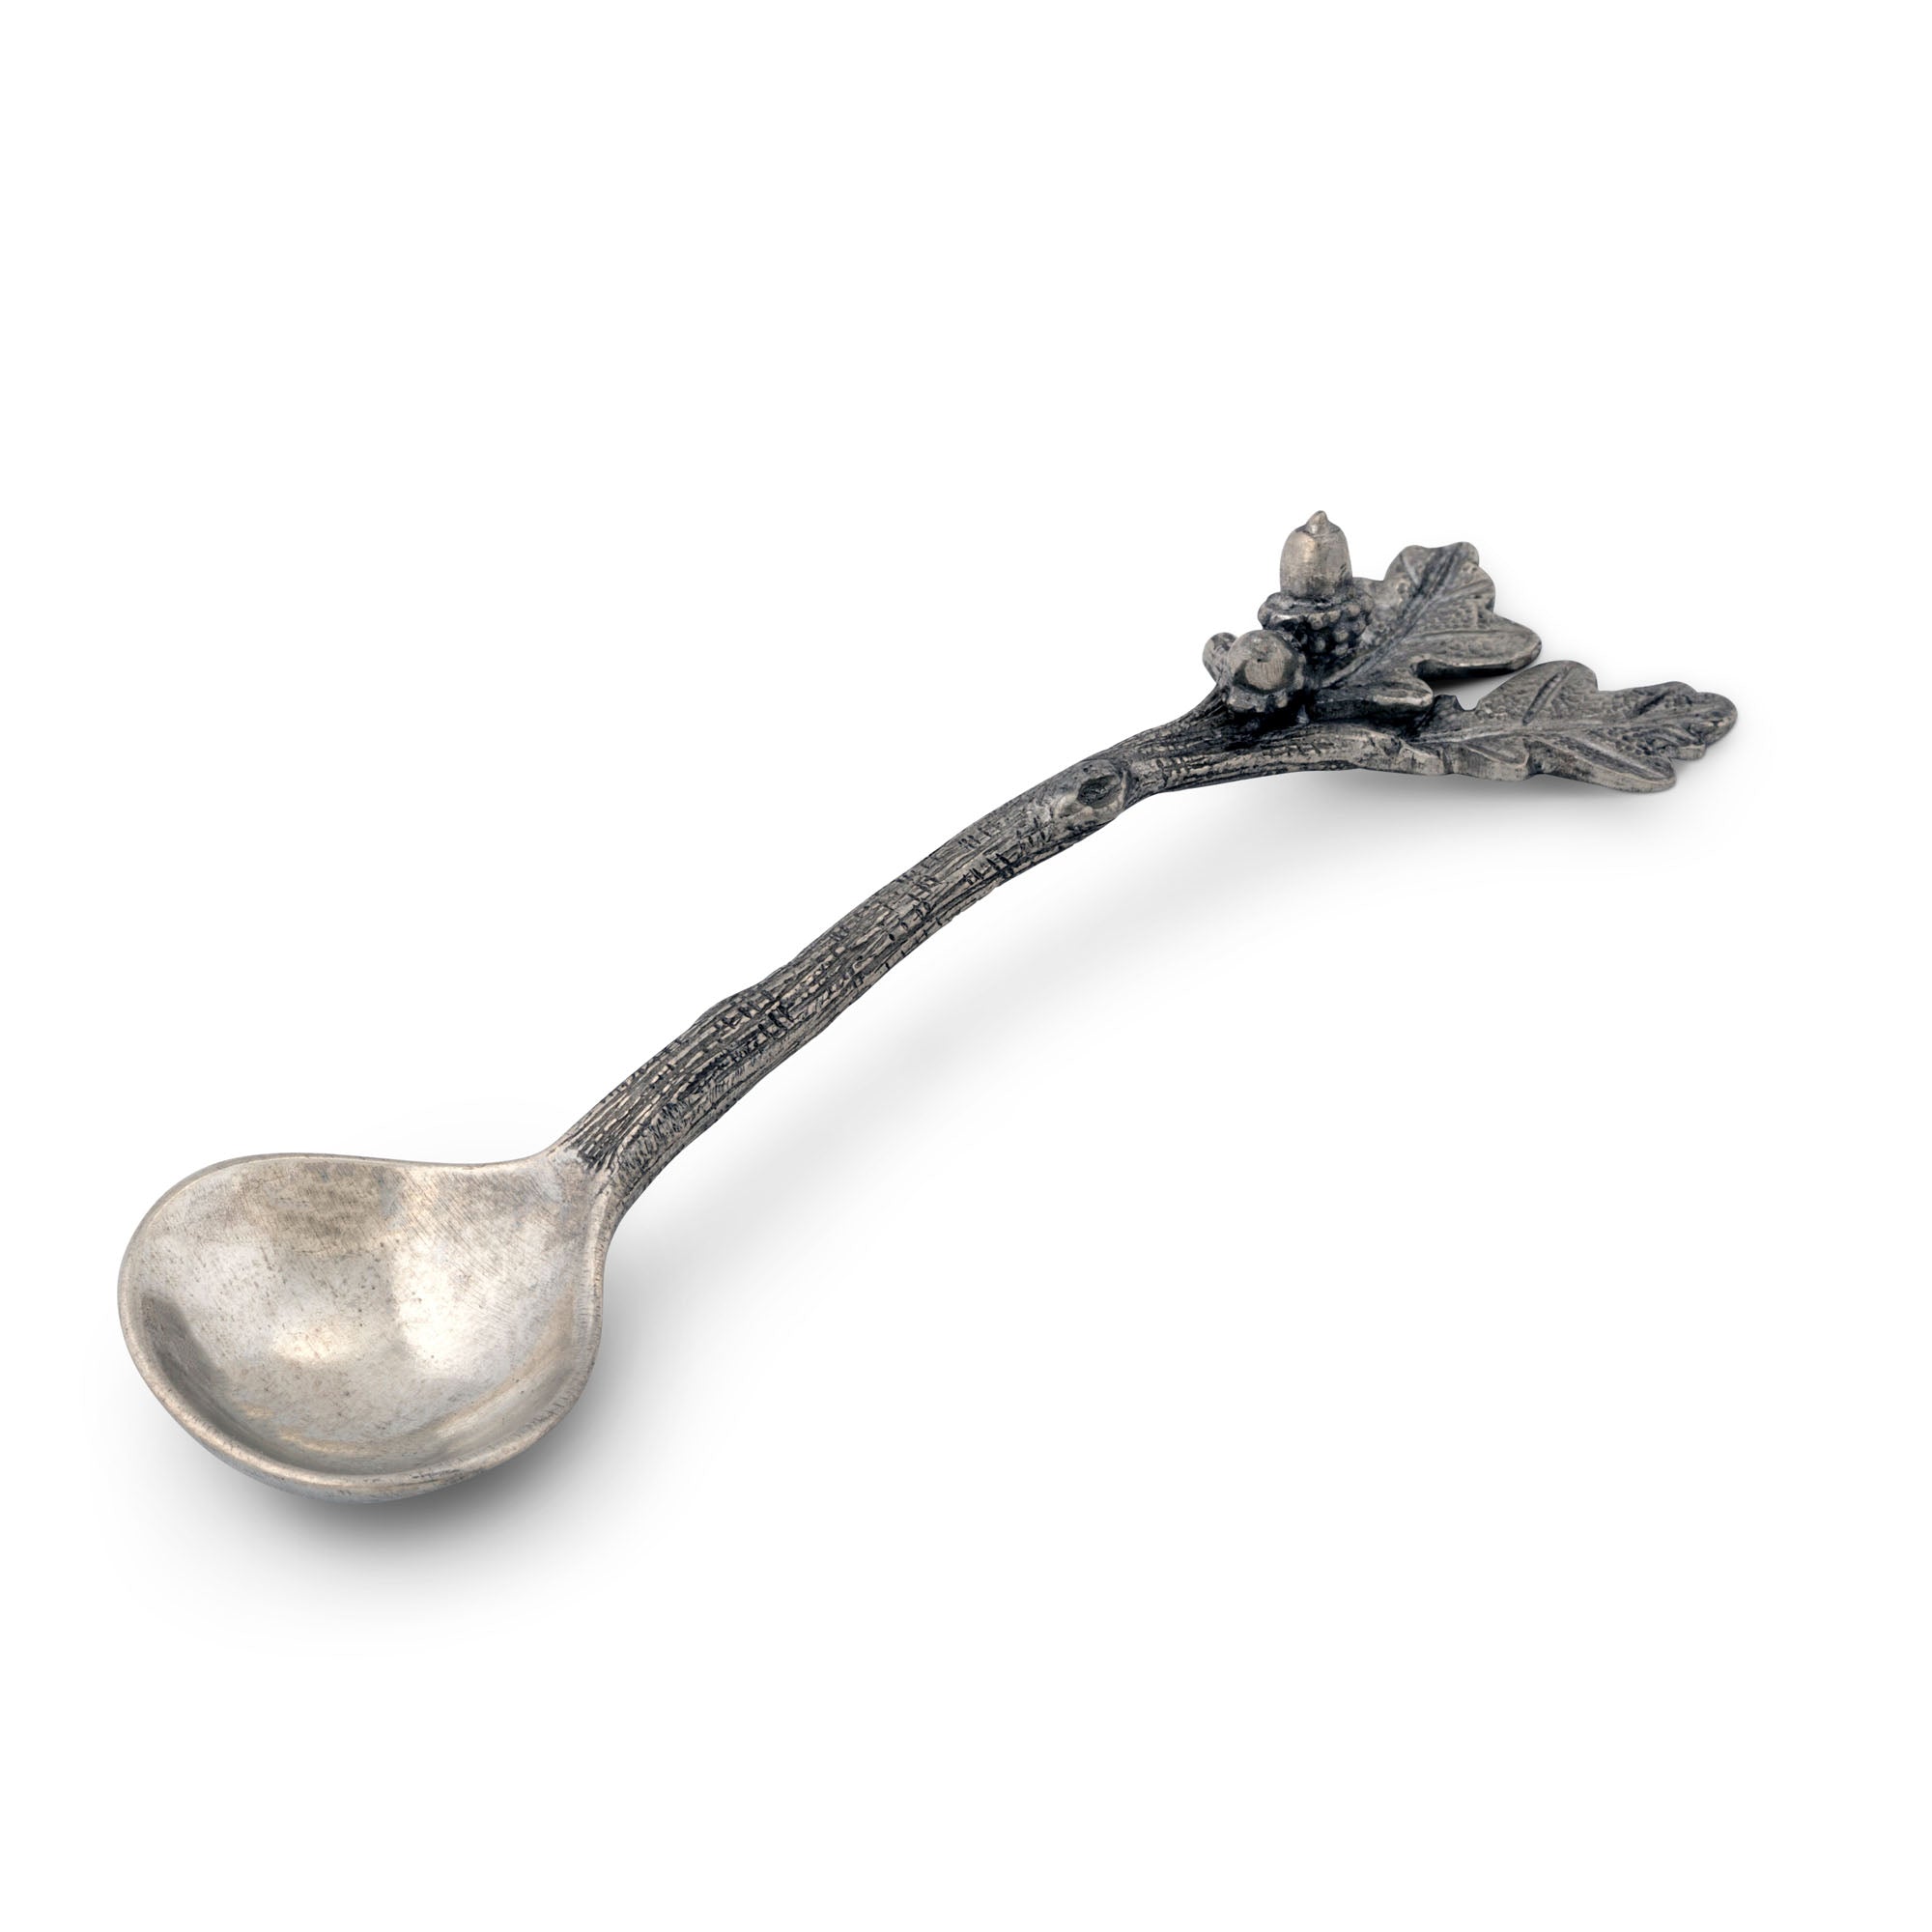 Vagabond House Acorn Small Ladle Spoon Product Image